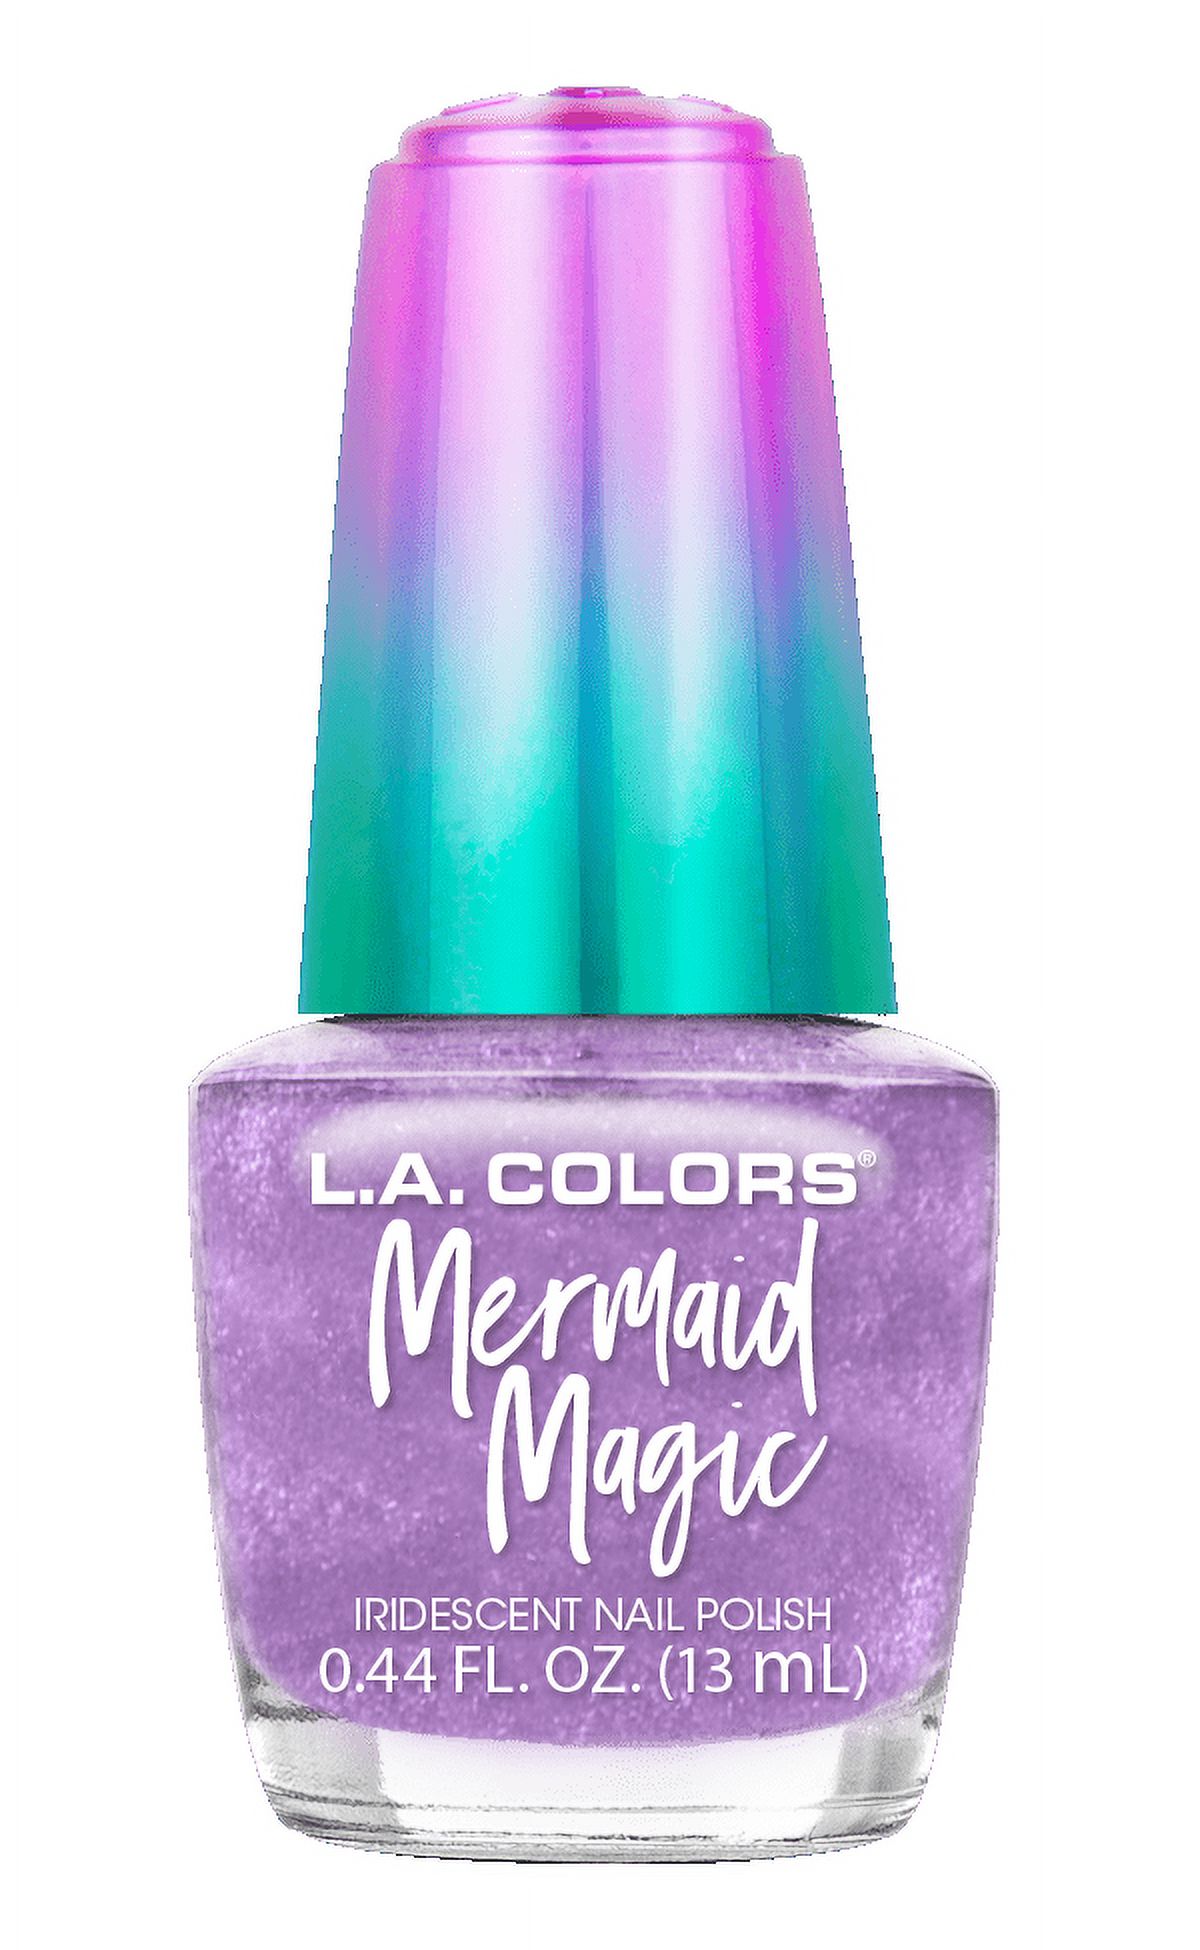 L.A. COLORS Mermaid Magic Nail Polish, Charms, 0.44 fl oz - image 1 of 6